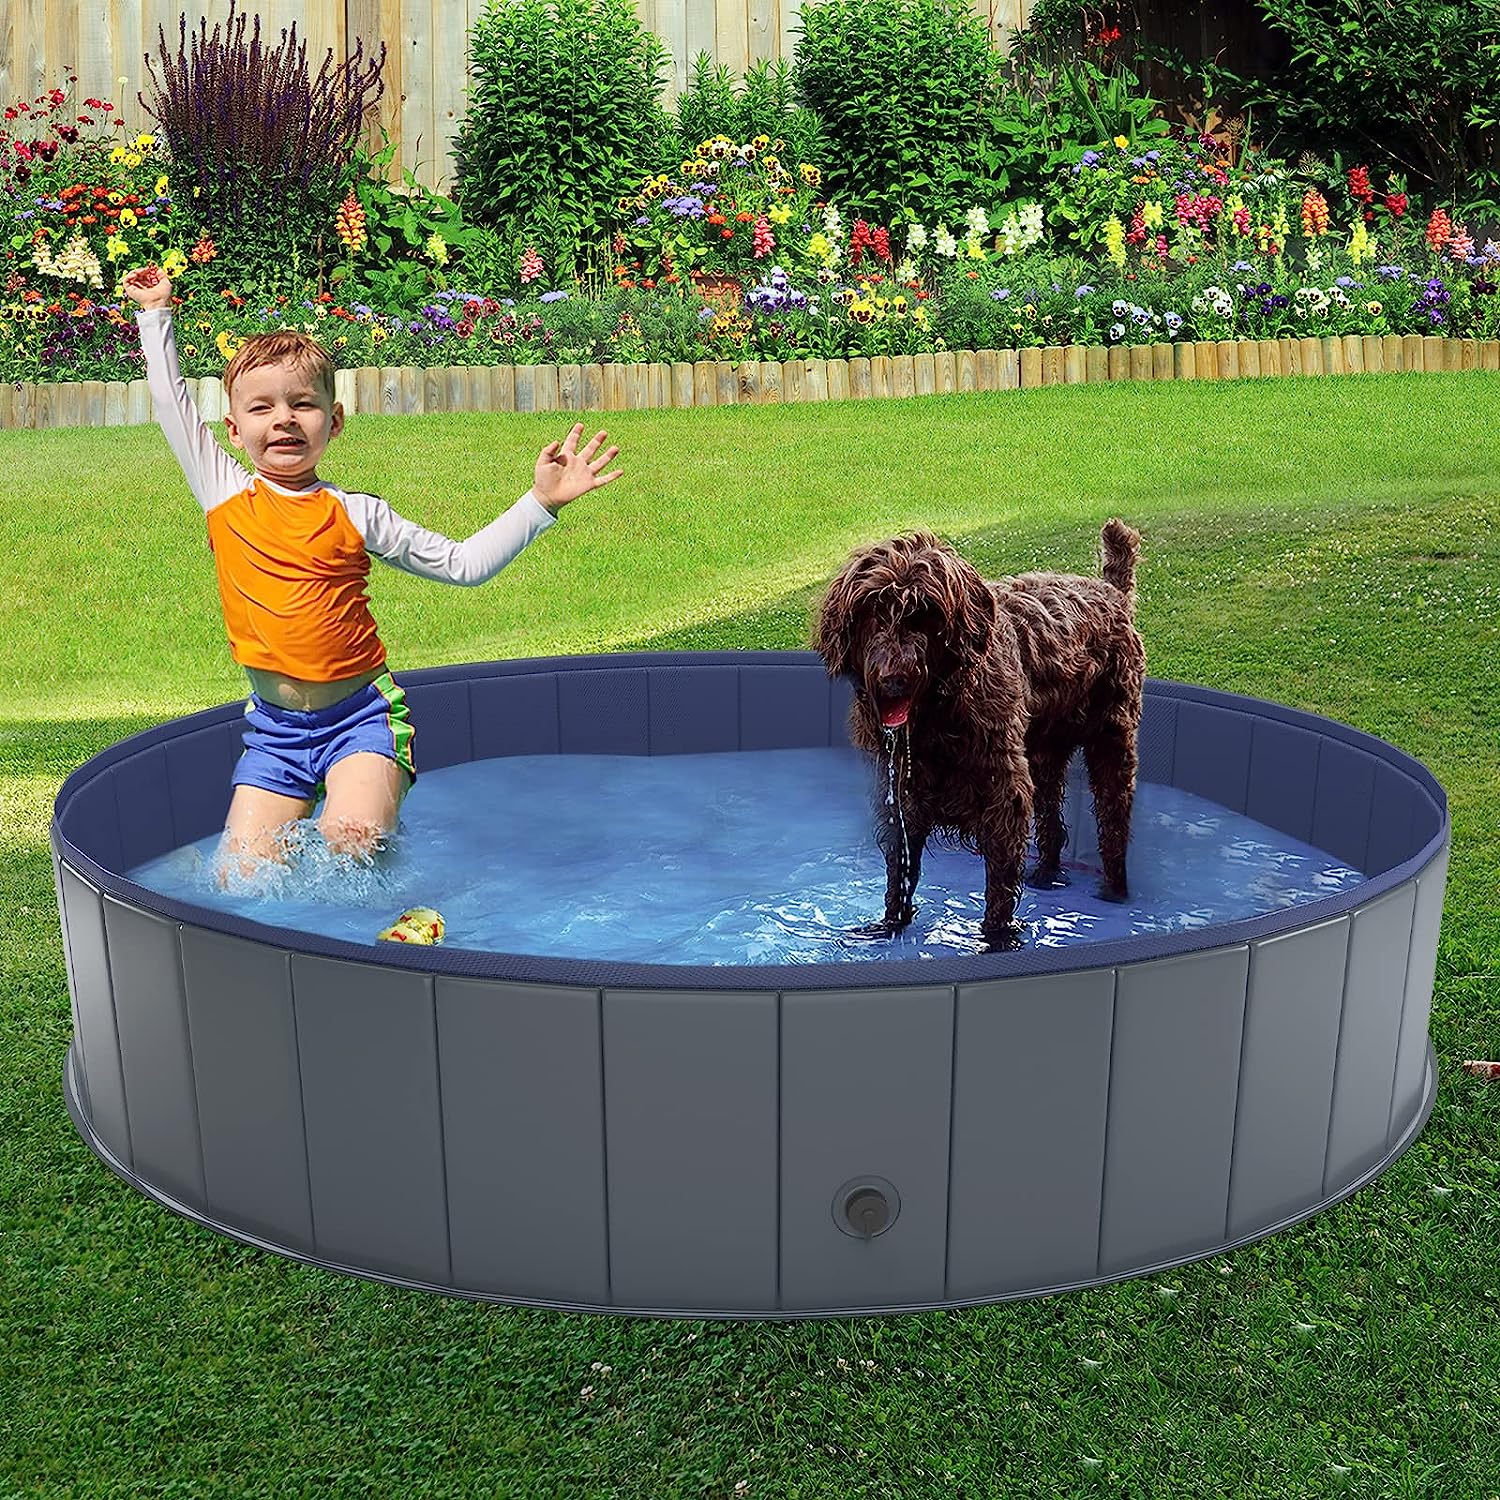 3. Niubya Foldable Dog Pool